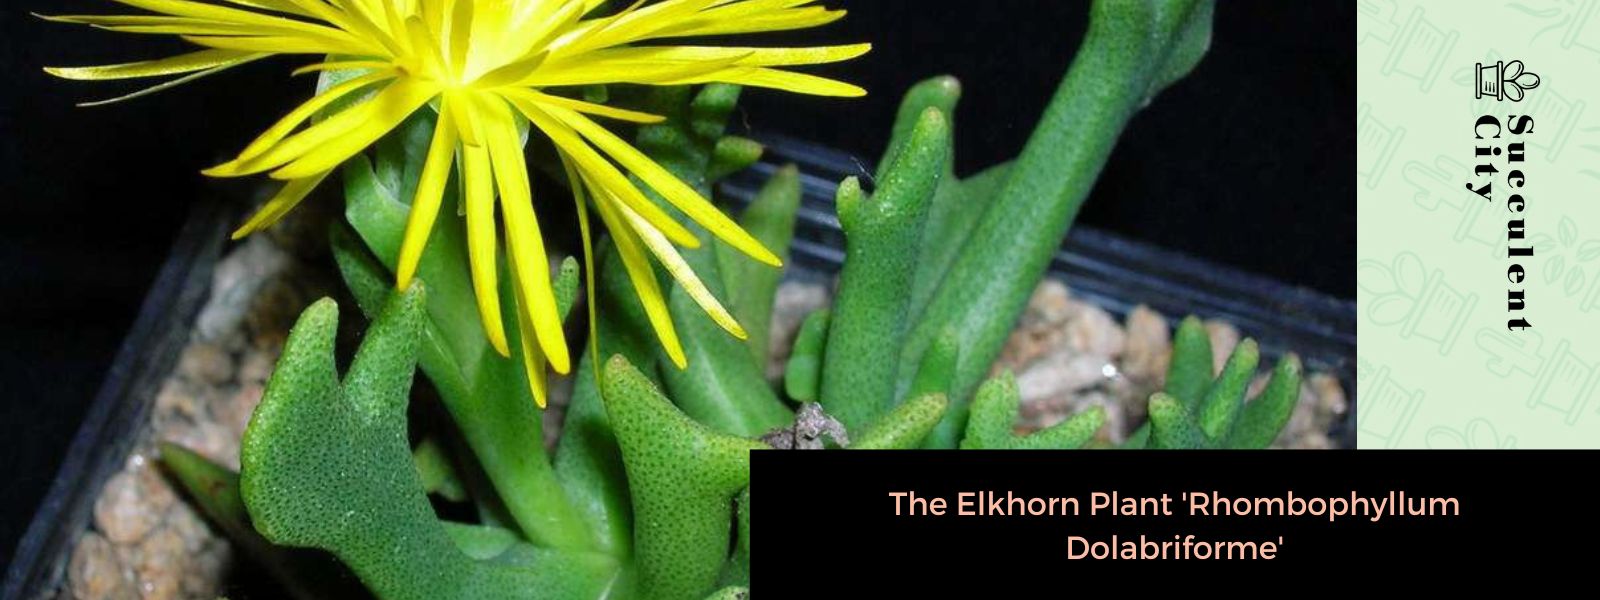 La planta de asta de alce “Rhombophyllum Dolabriforme”